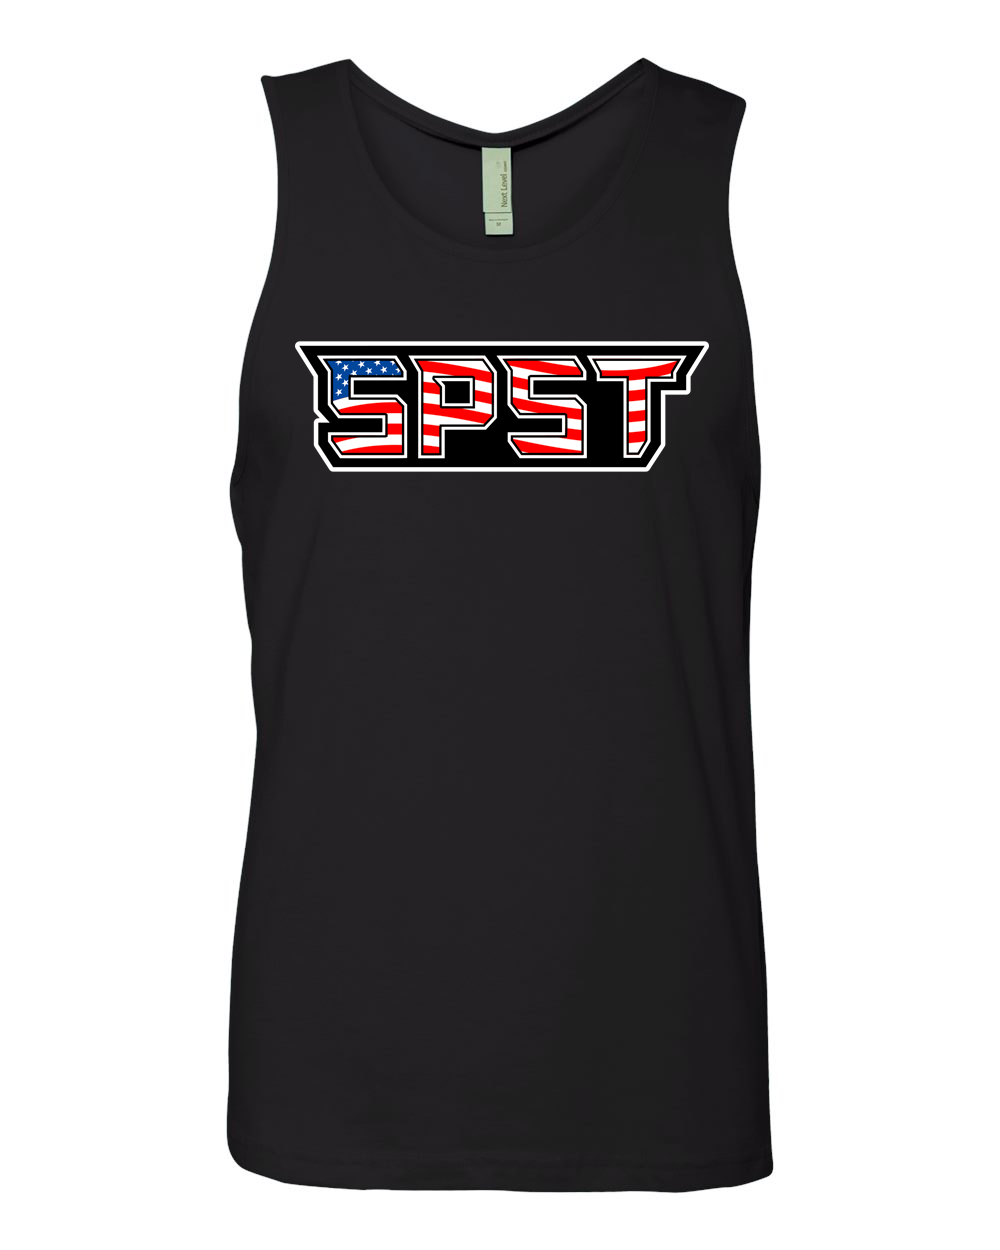 SPST Logo Cotton Muscle Tank - 3633